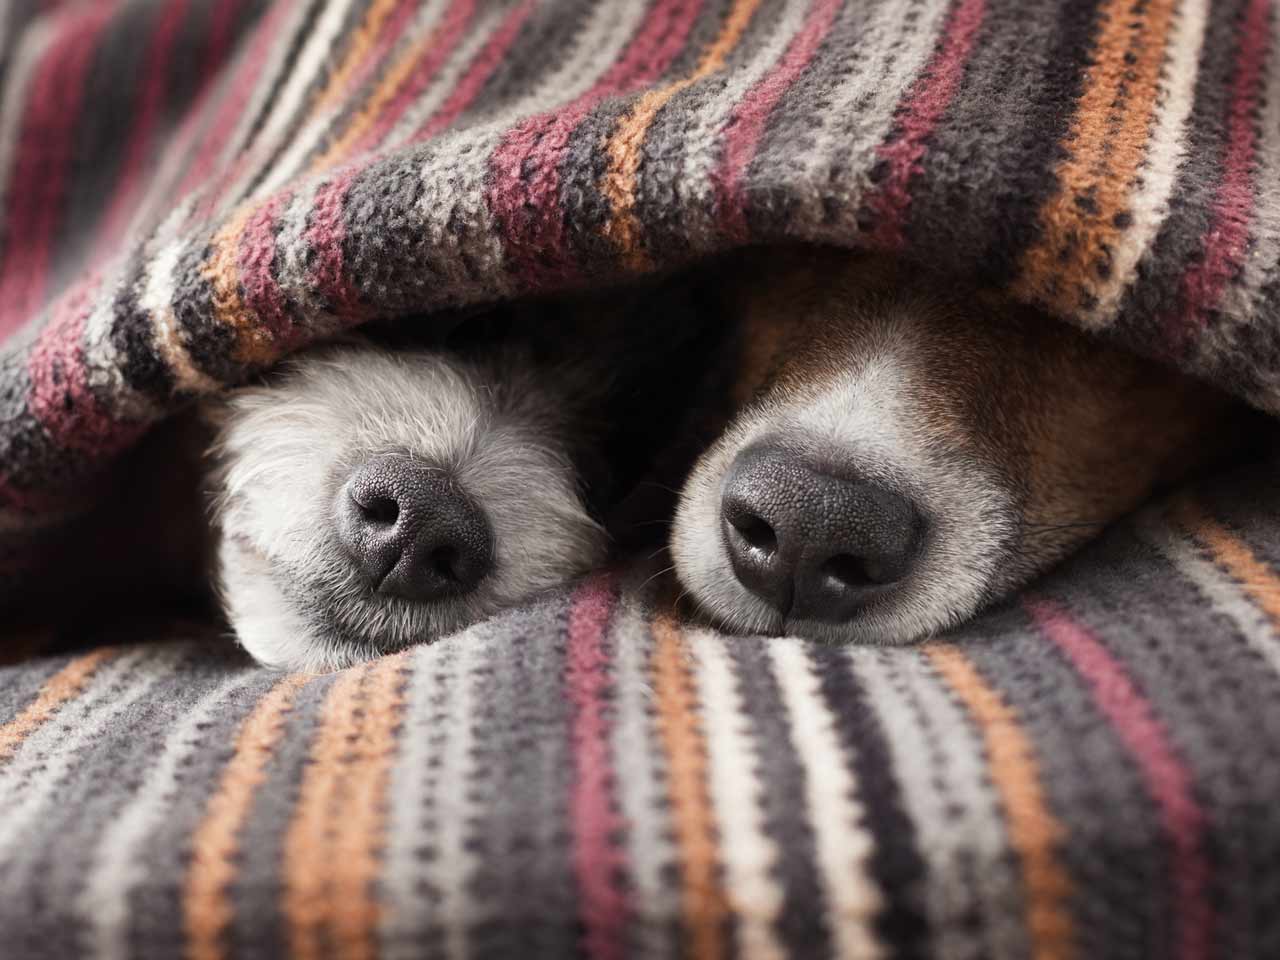 Dogs hiding under blanket